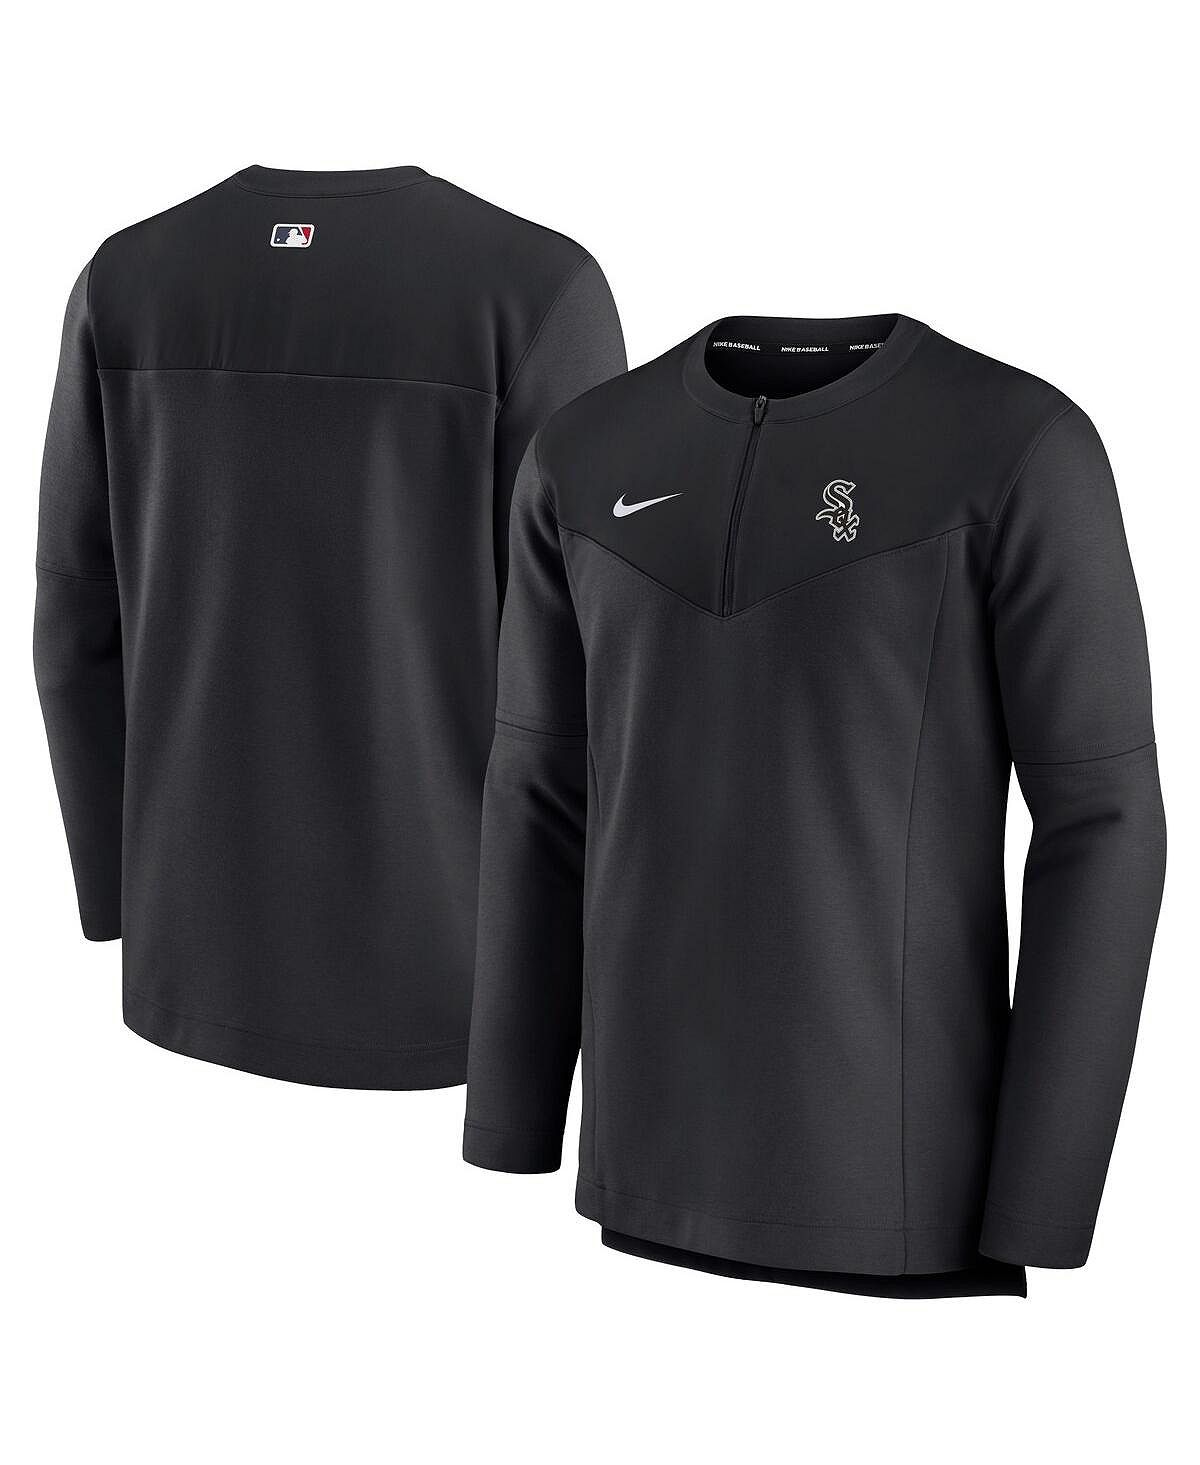 Мужская футболка с молнией до половины длины черного цвета Chicago White Sox Authentic Collection Game Time Performance Nike